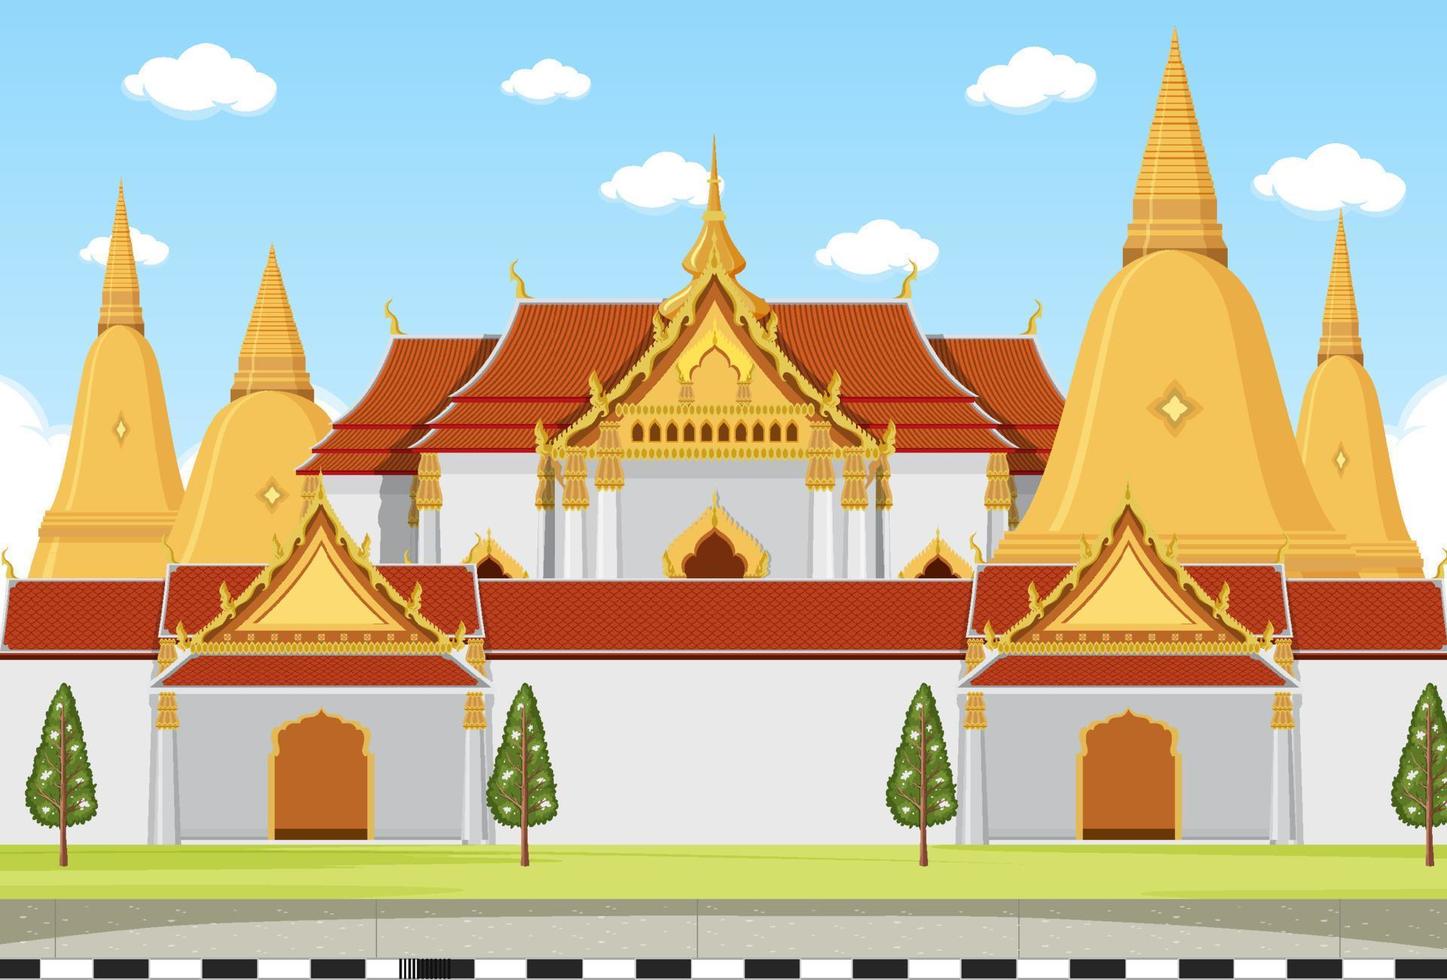 thailand ikoniska turism attraktion bakgrund vektor